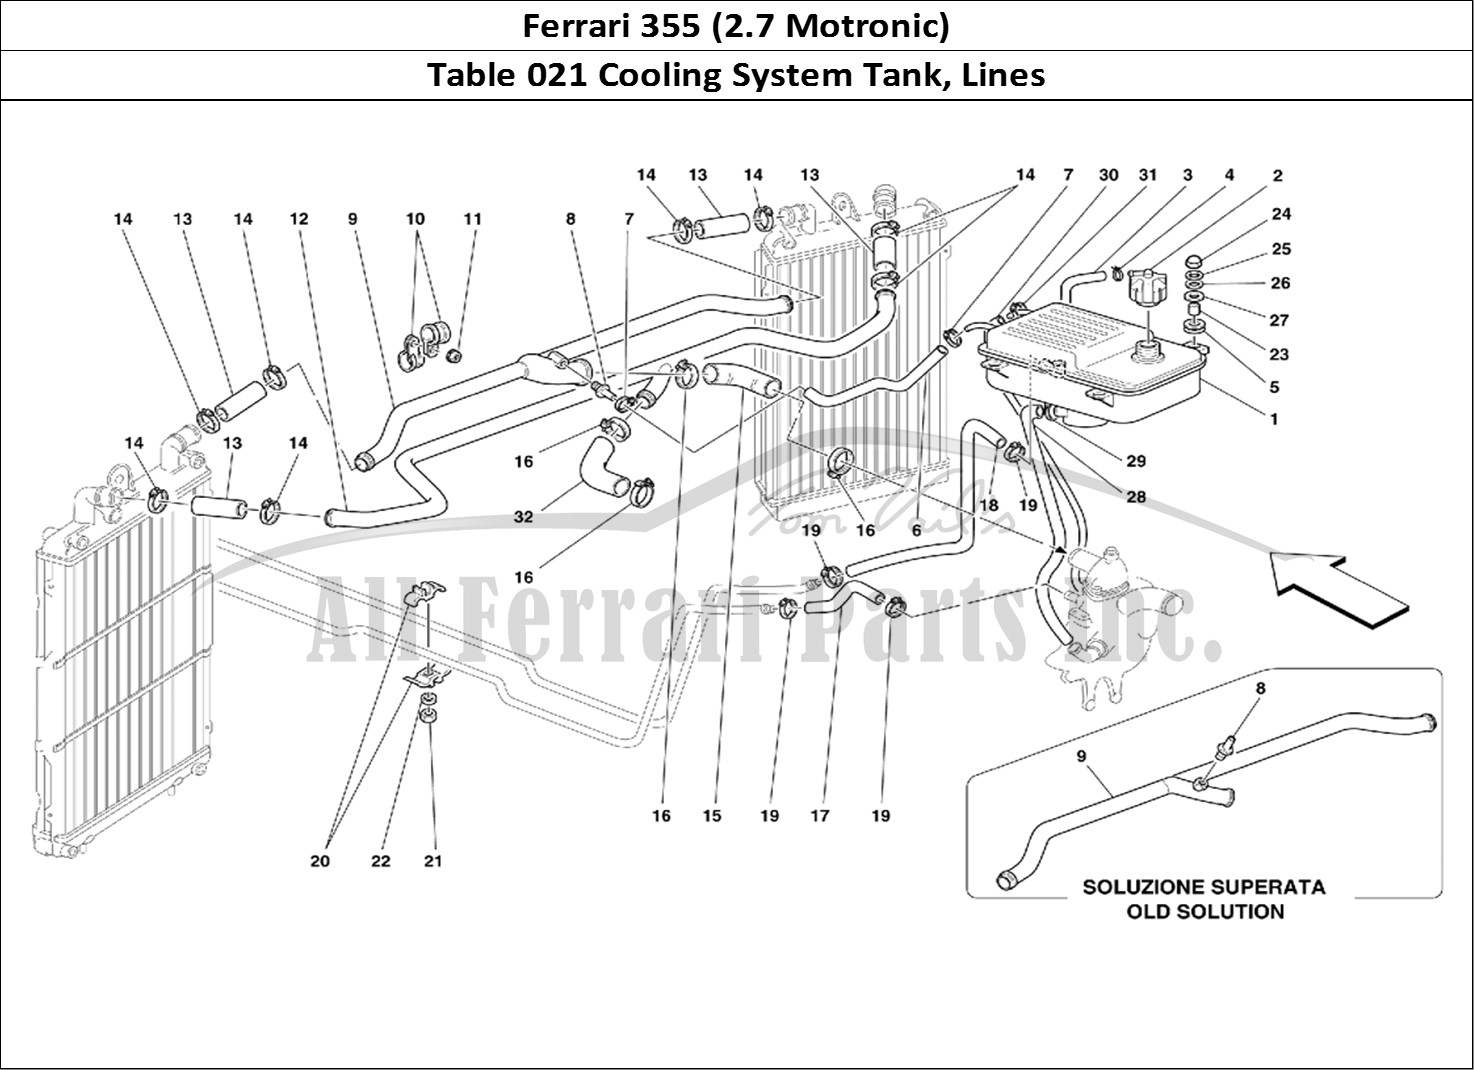 Ferrari Parts Ferrari 355 (2.7 Motronic) Page 021 Cooling System - Nourice